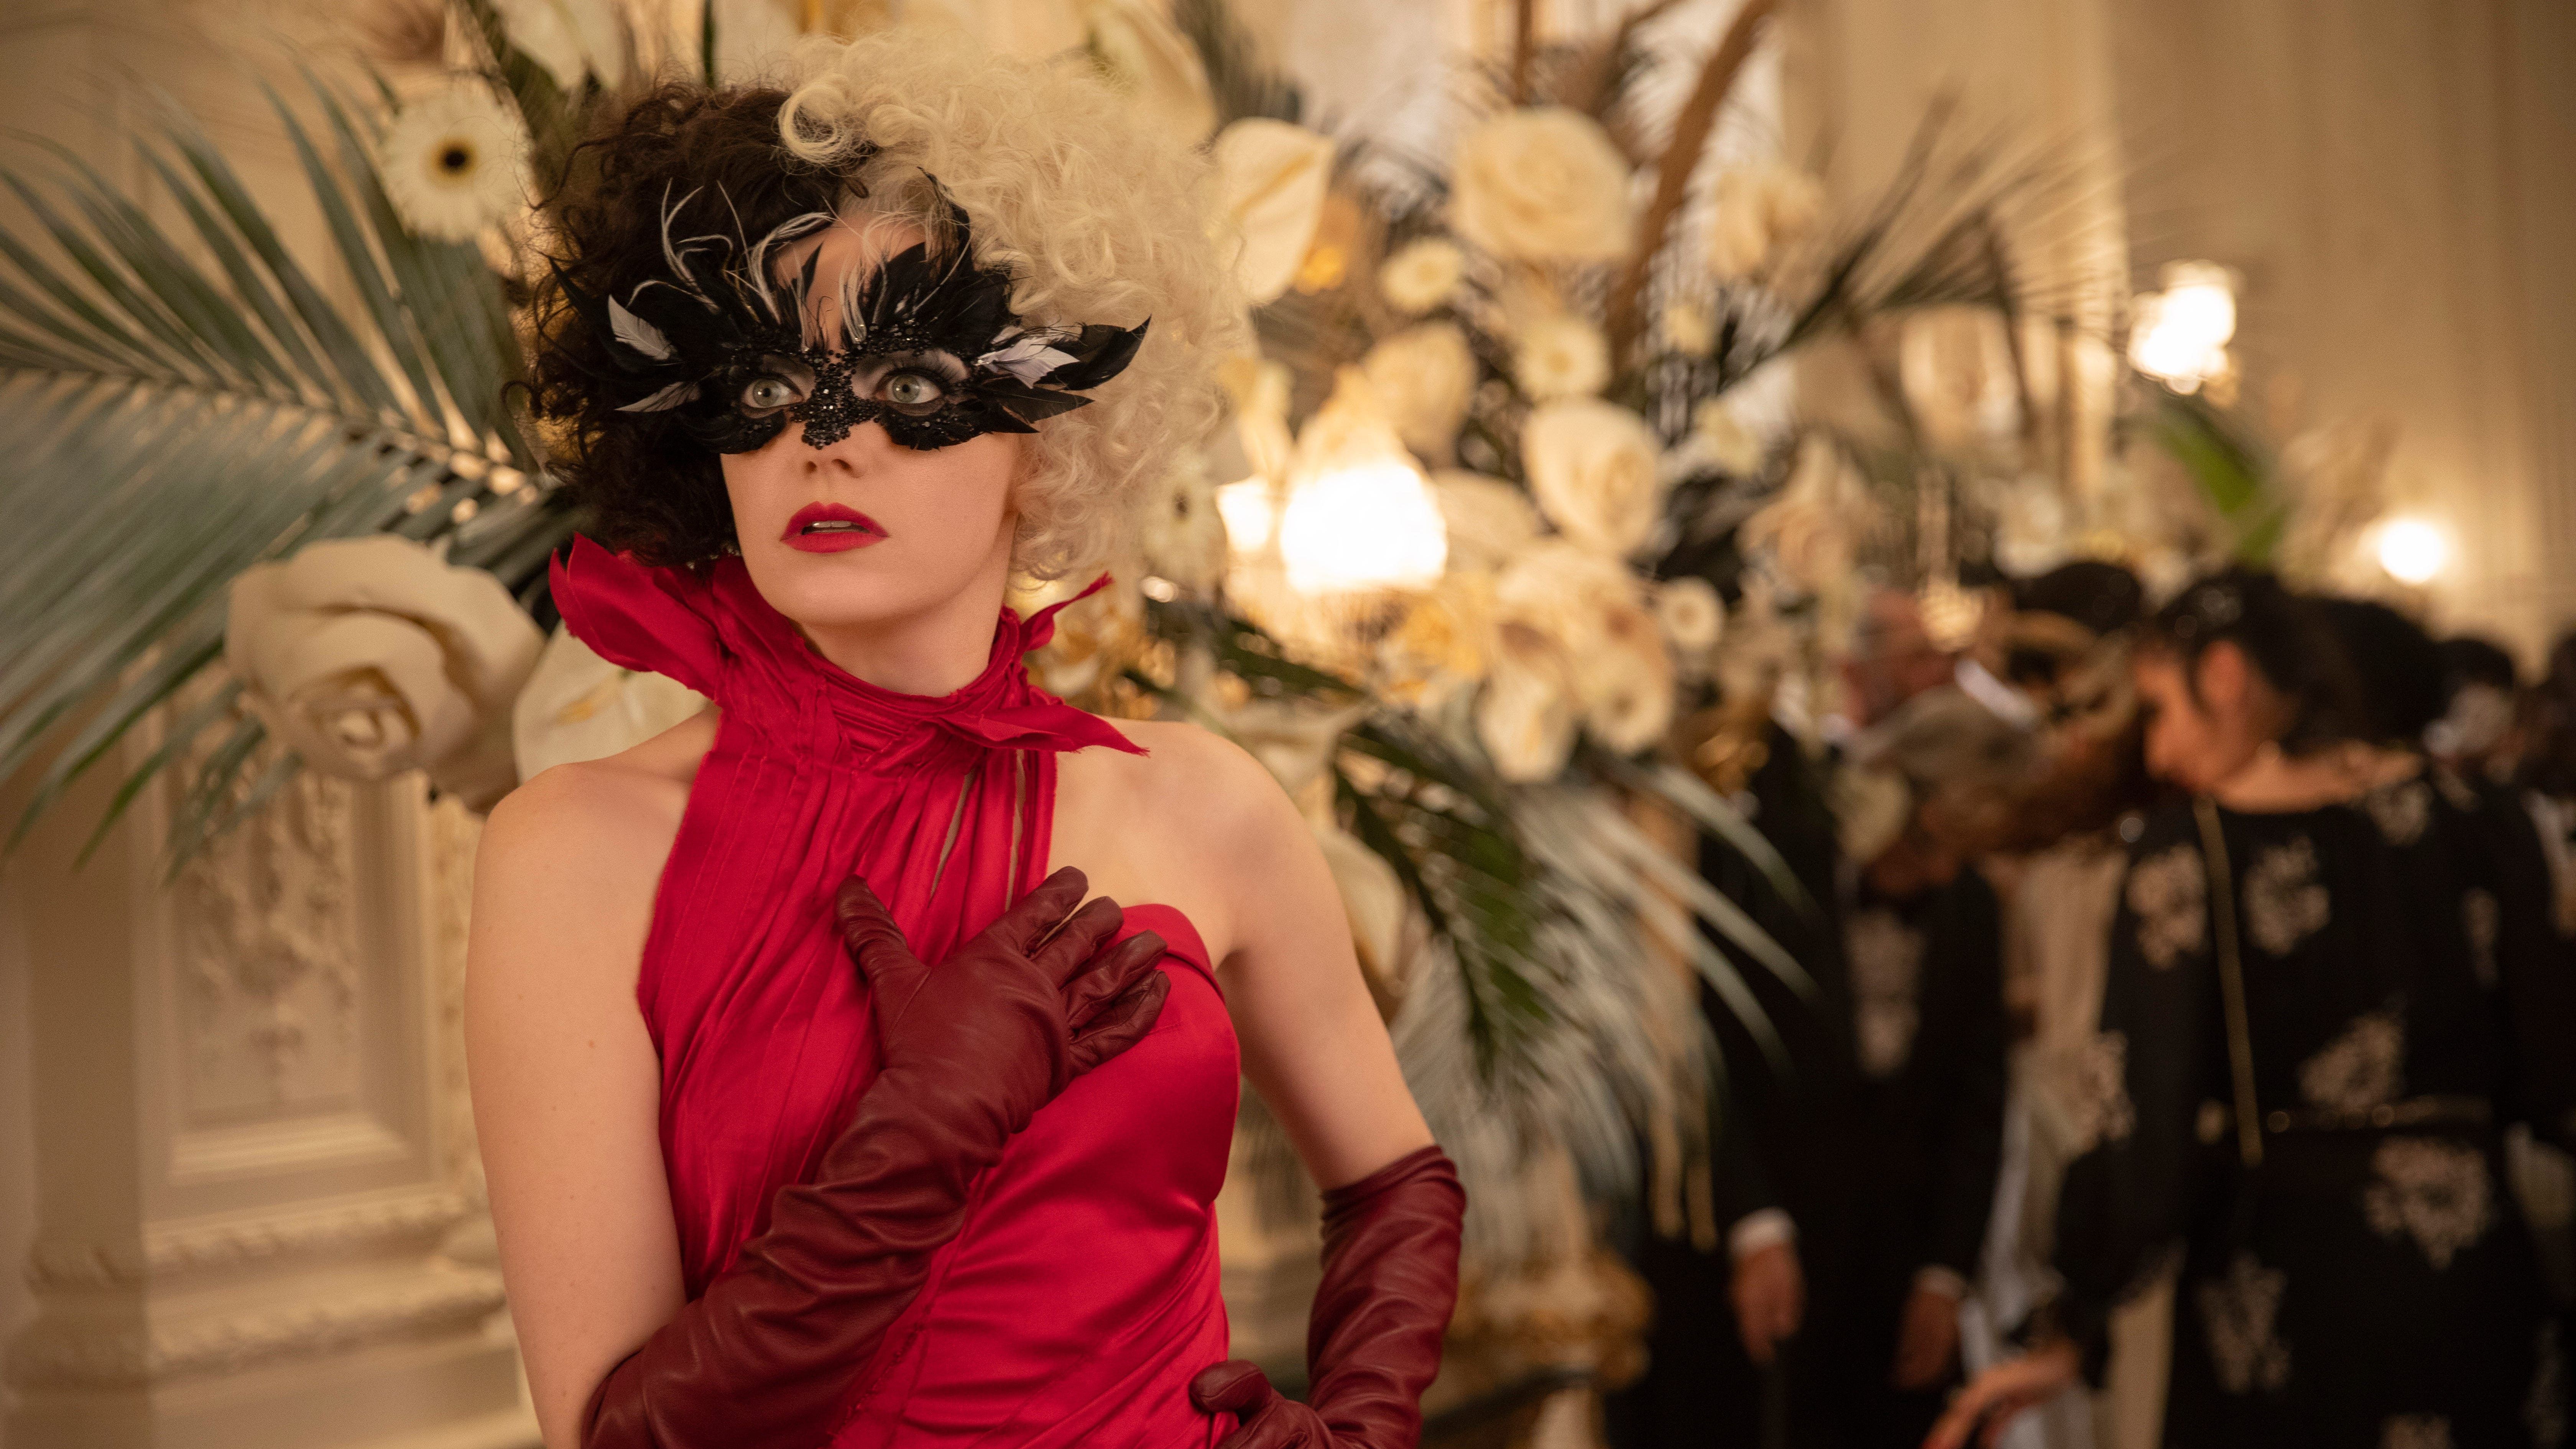 Emma Stone Wore Cruella de Vil LV Suit On Red Carpet